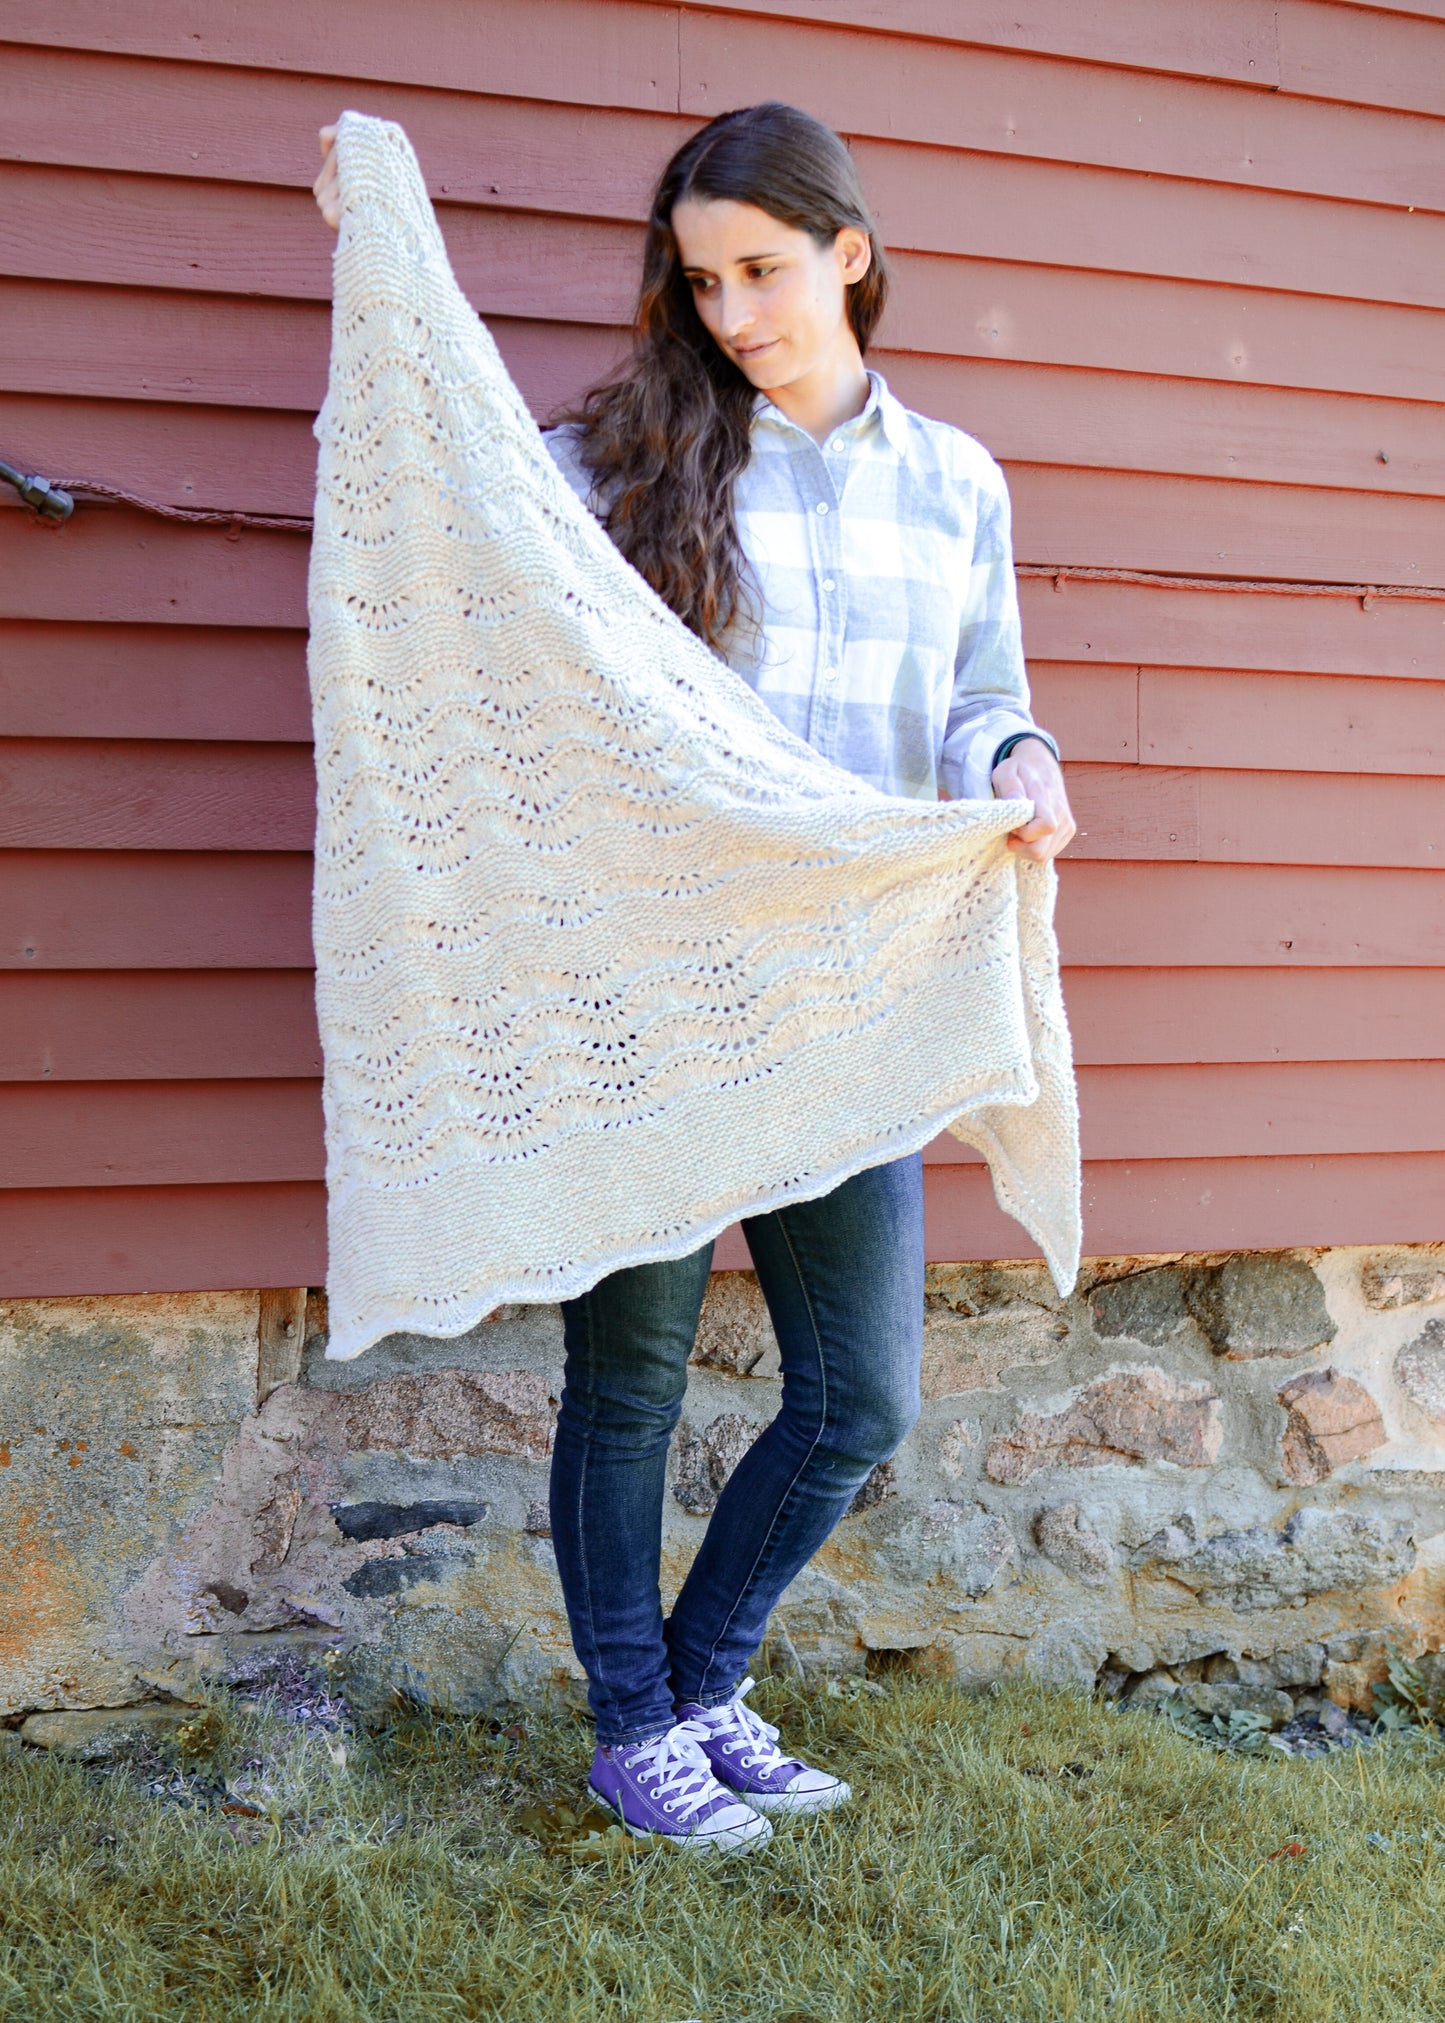 Nevasca Shawl Knitting Pattern - Digital Download